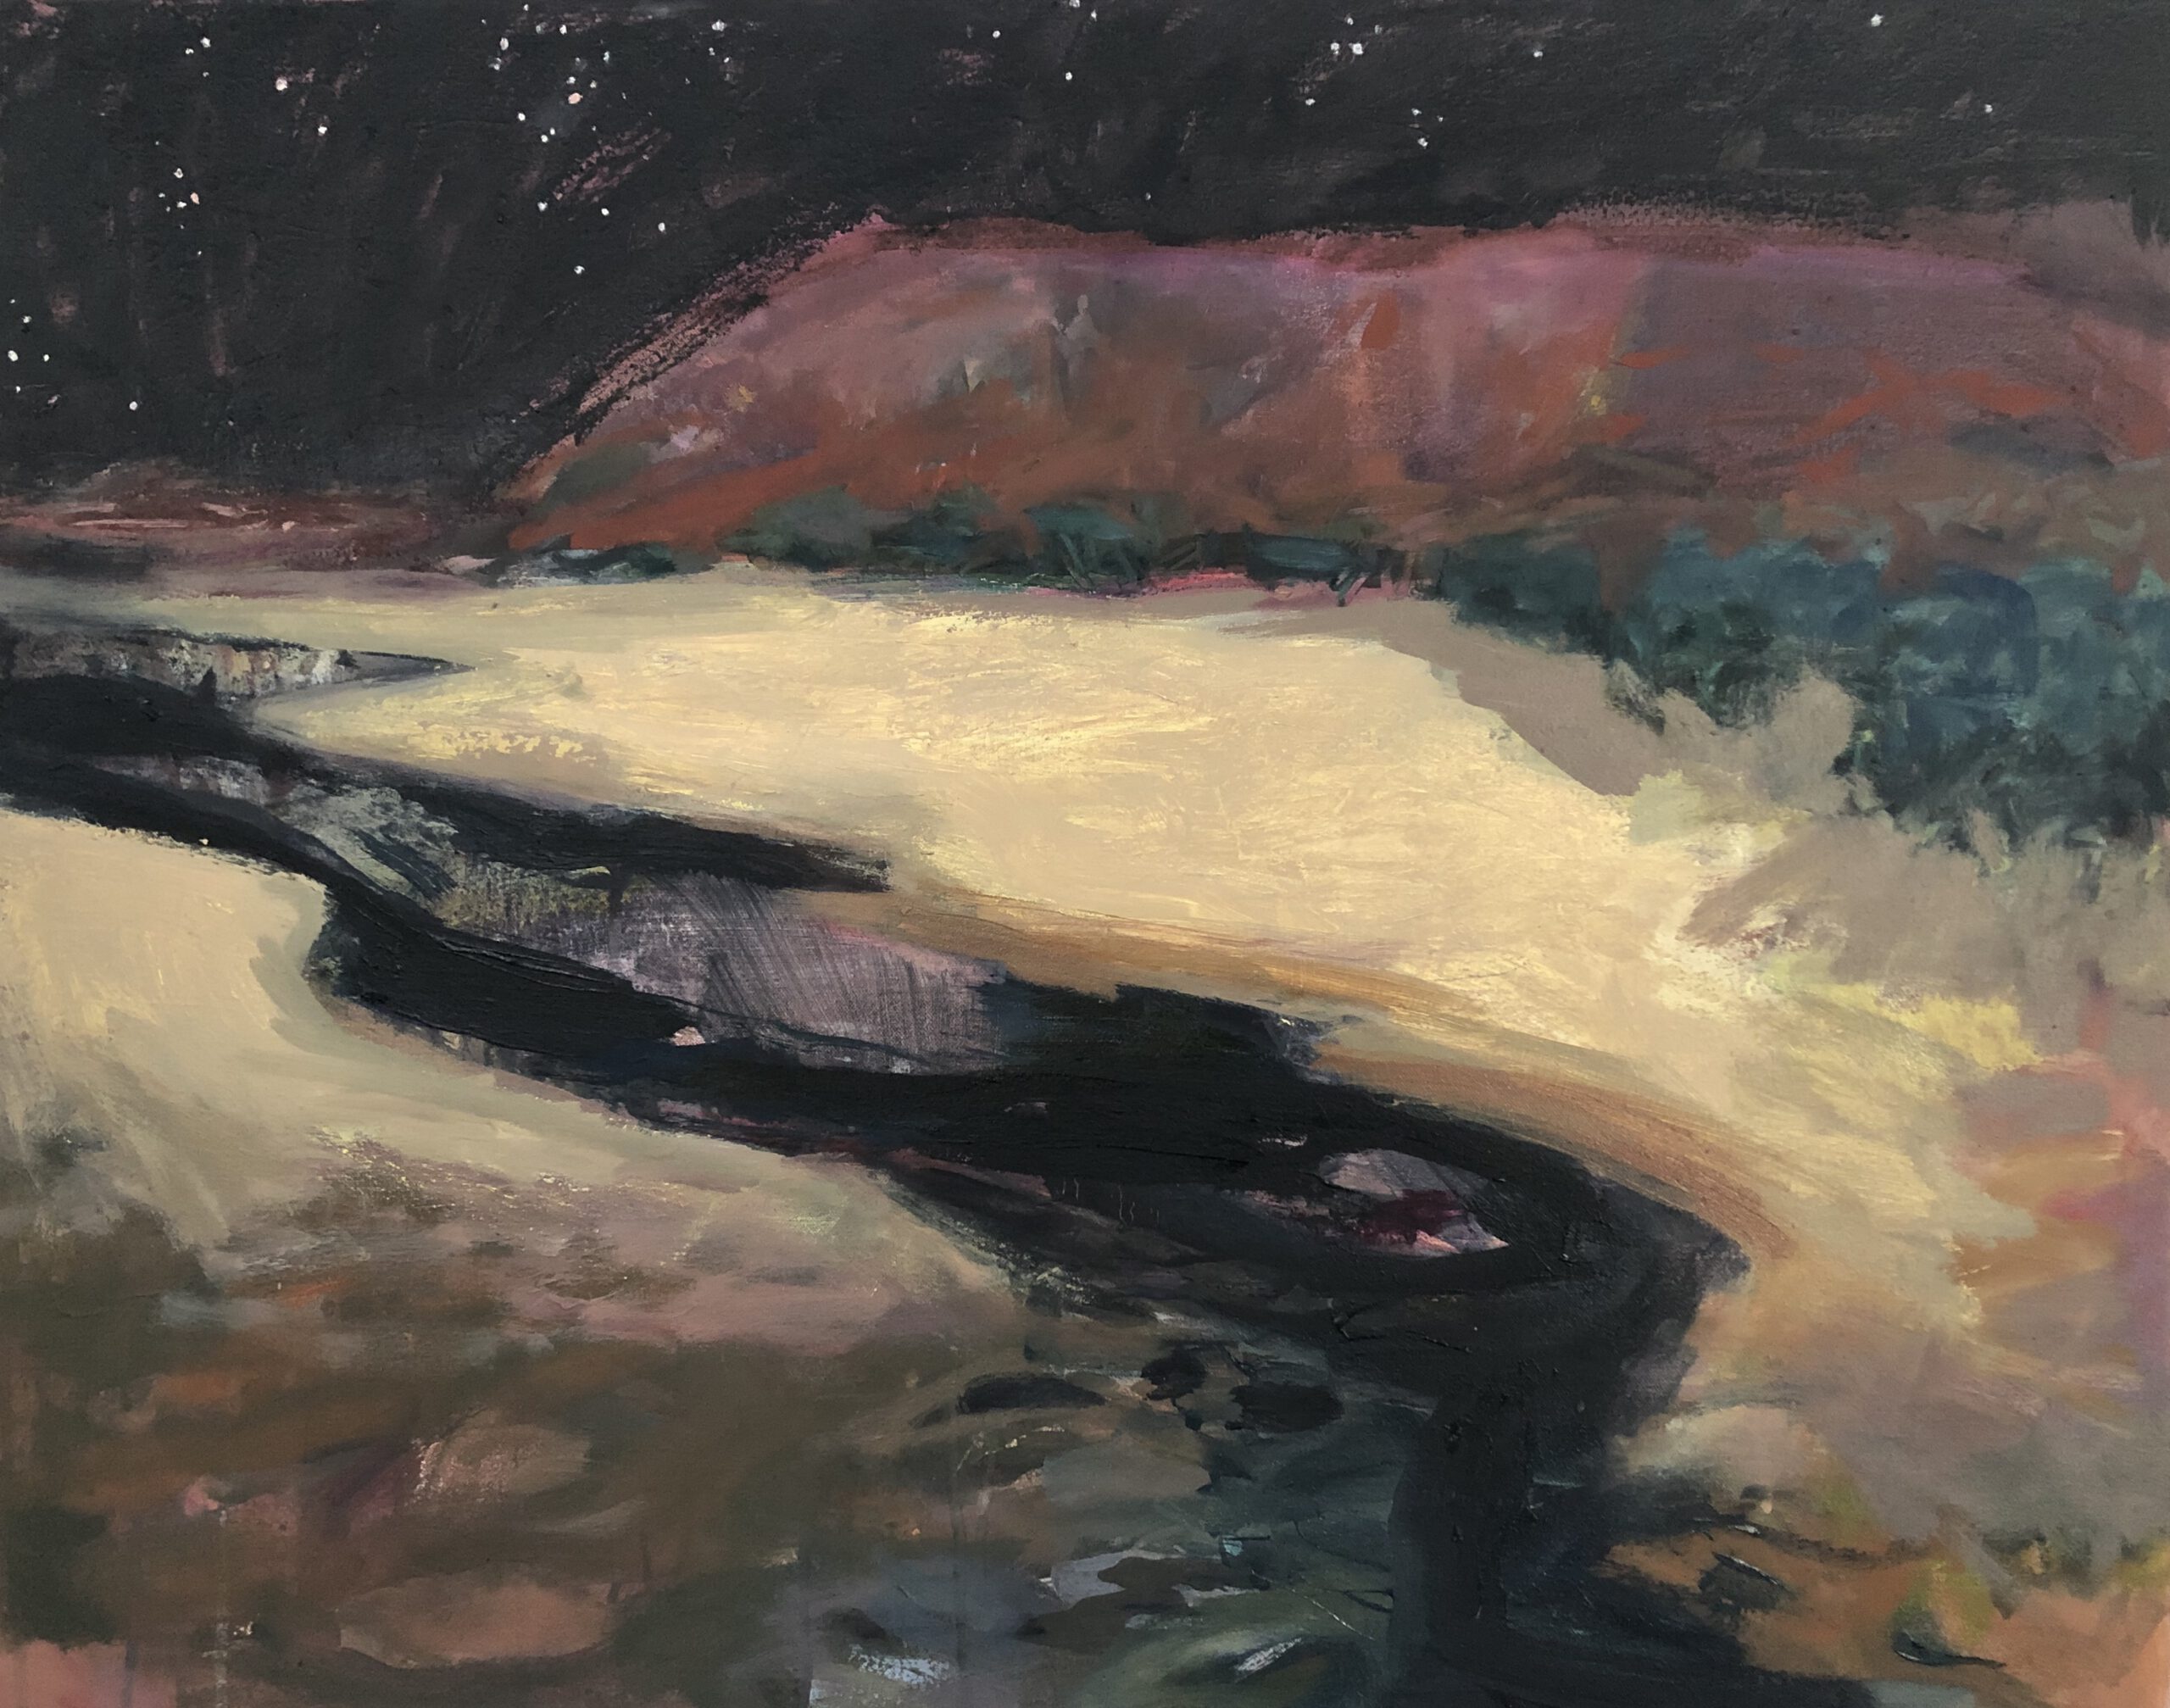 McInnis_Night River_Oil on Canvas_60x75cm_master